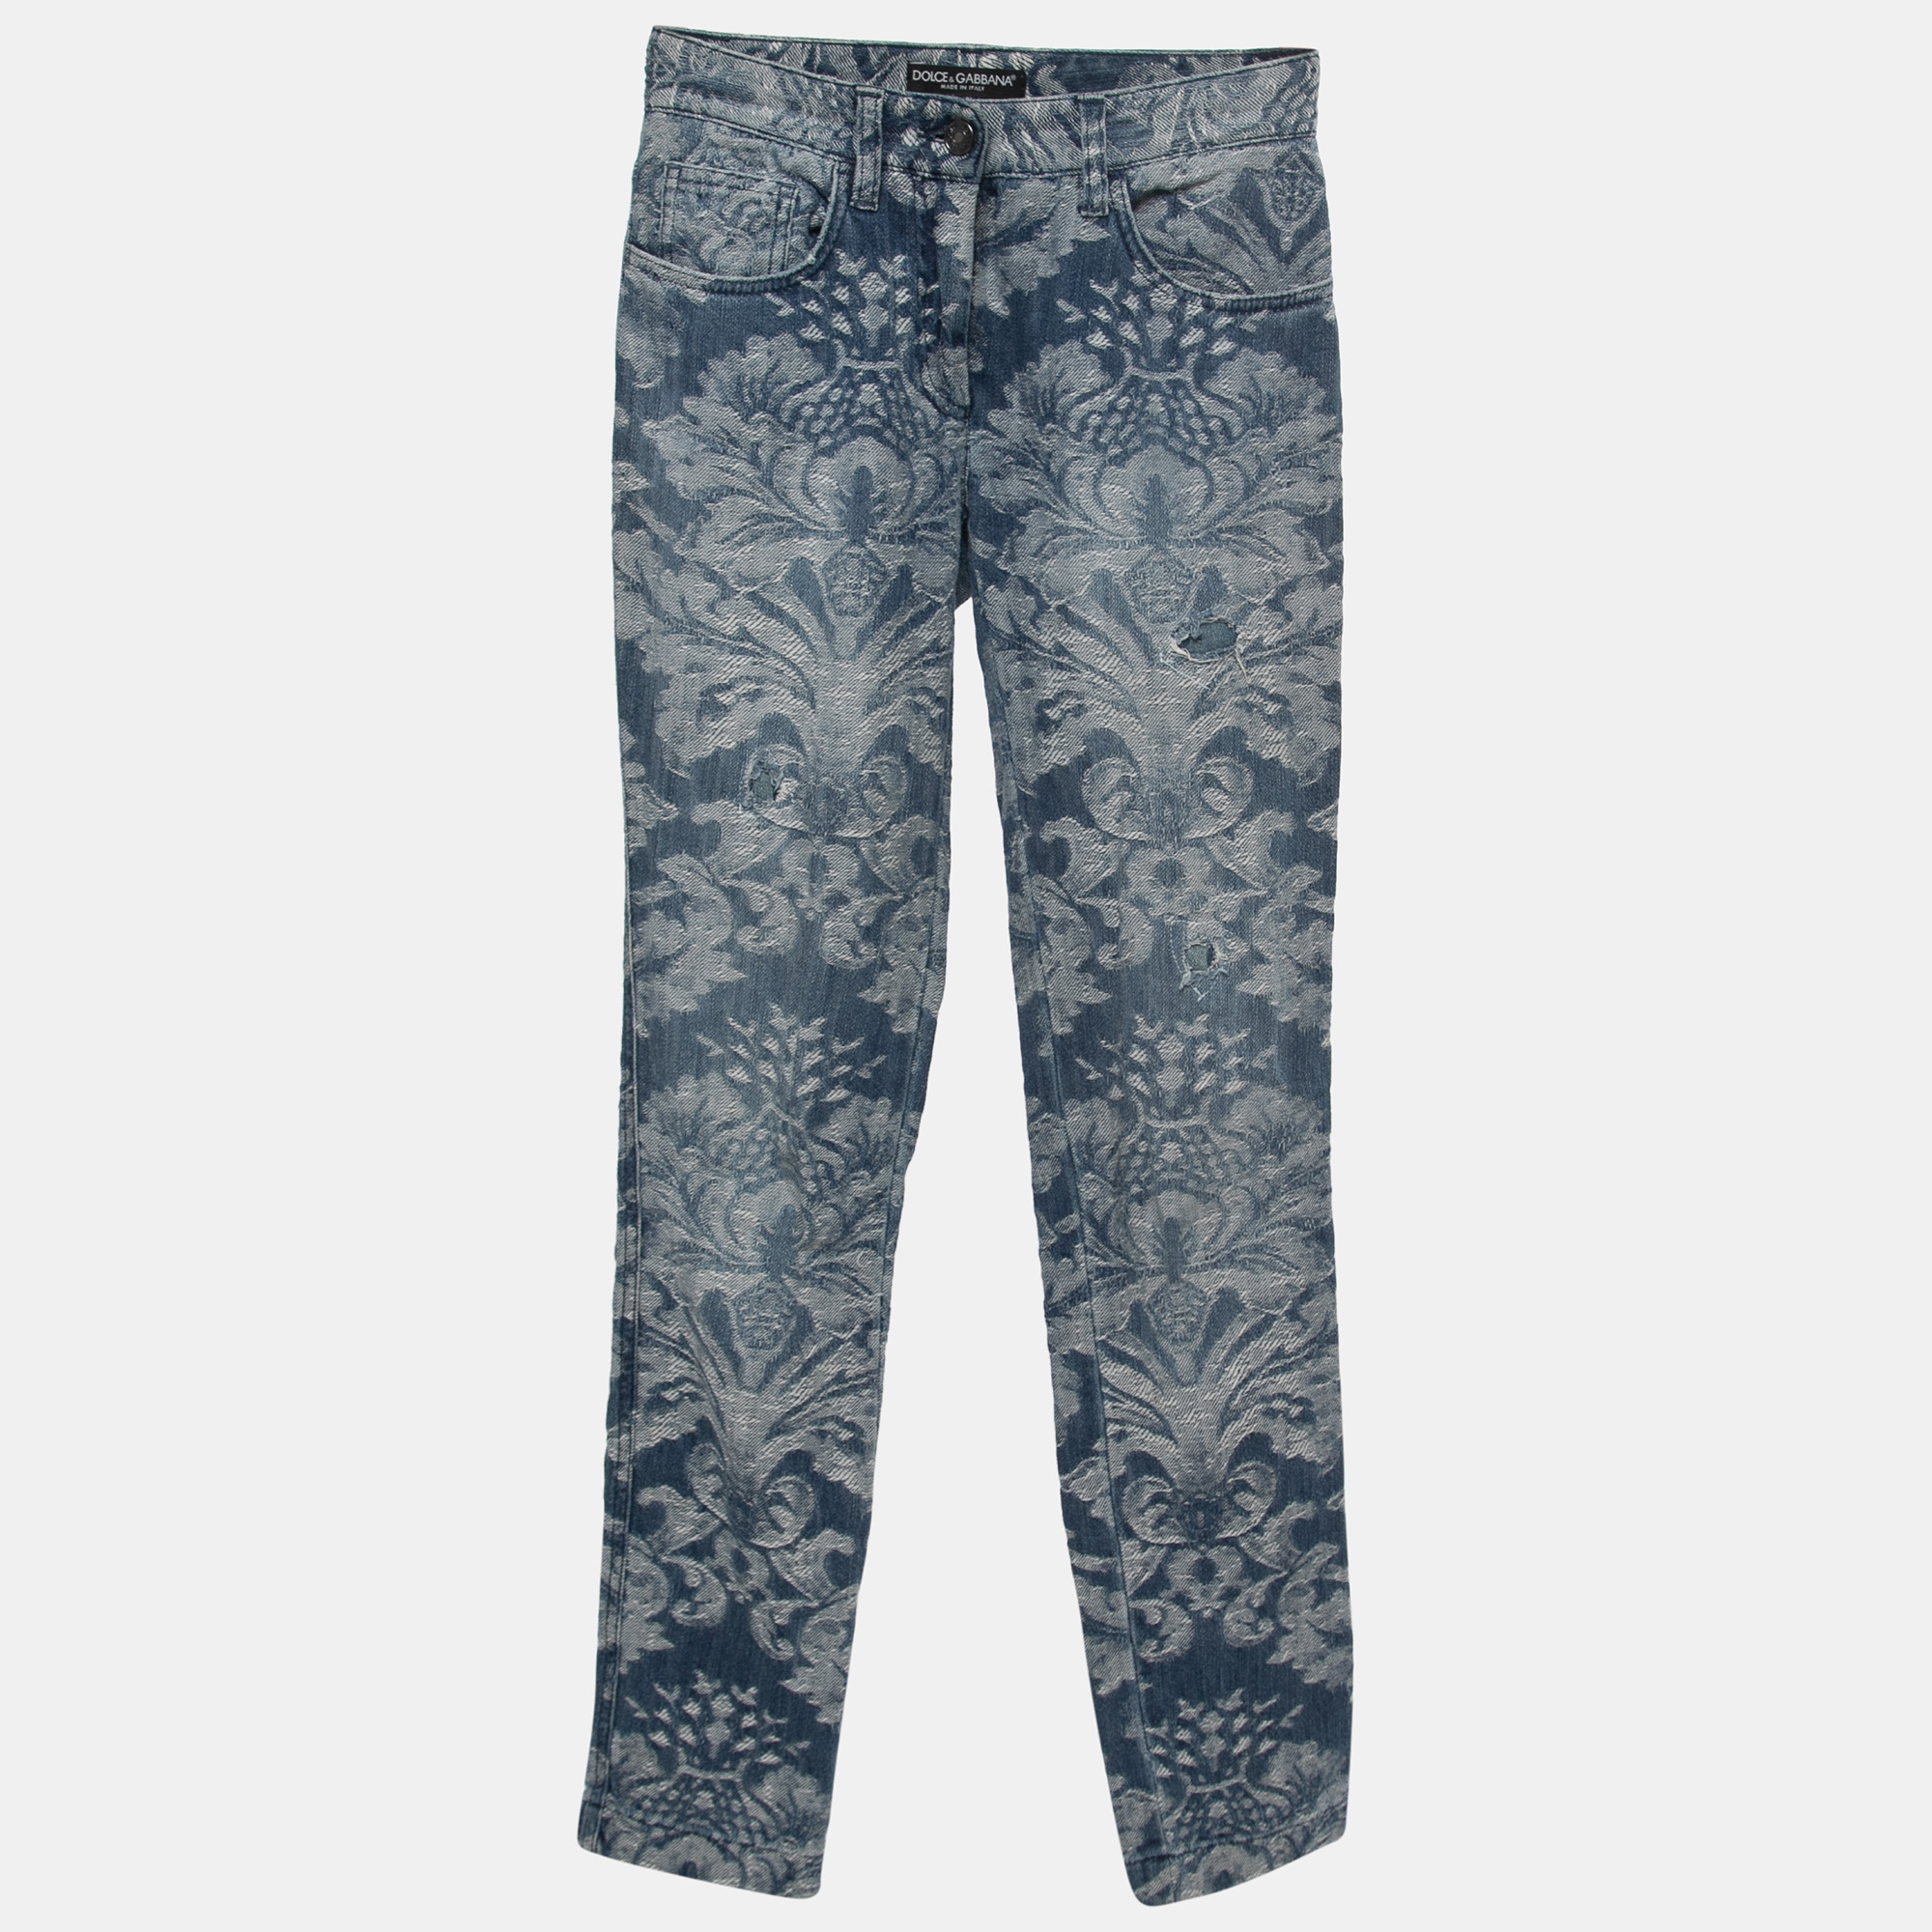 Dolce & Gabbana Blue Jacquard Denim Jeans XS Waist 24